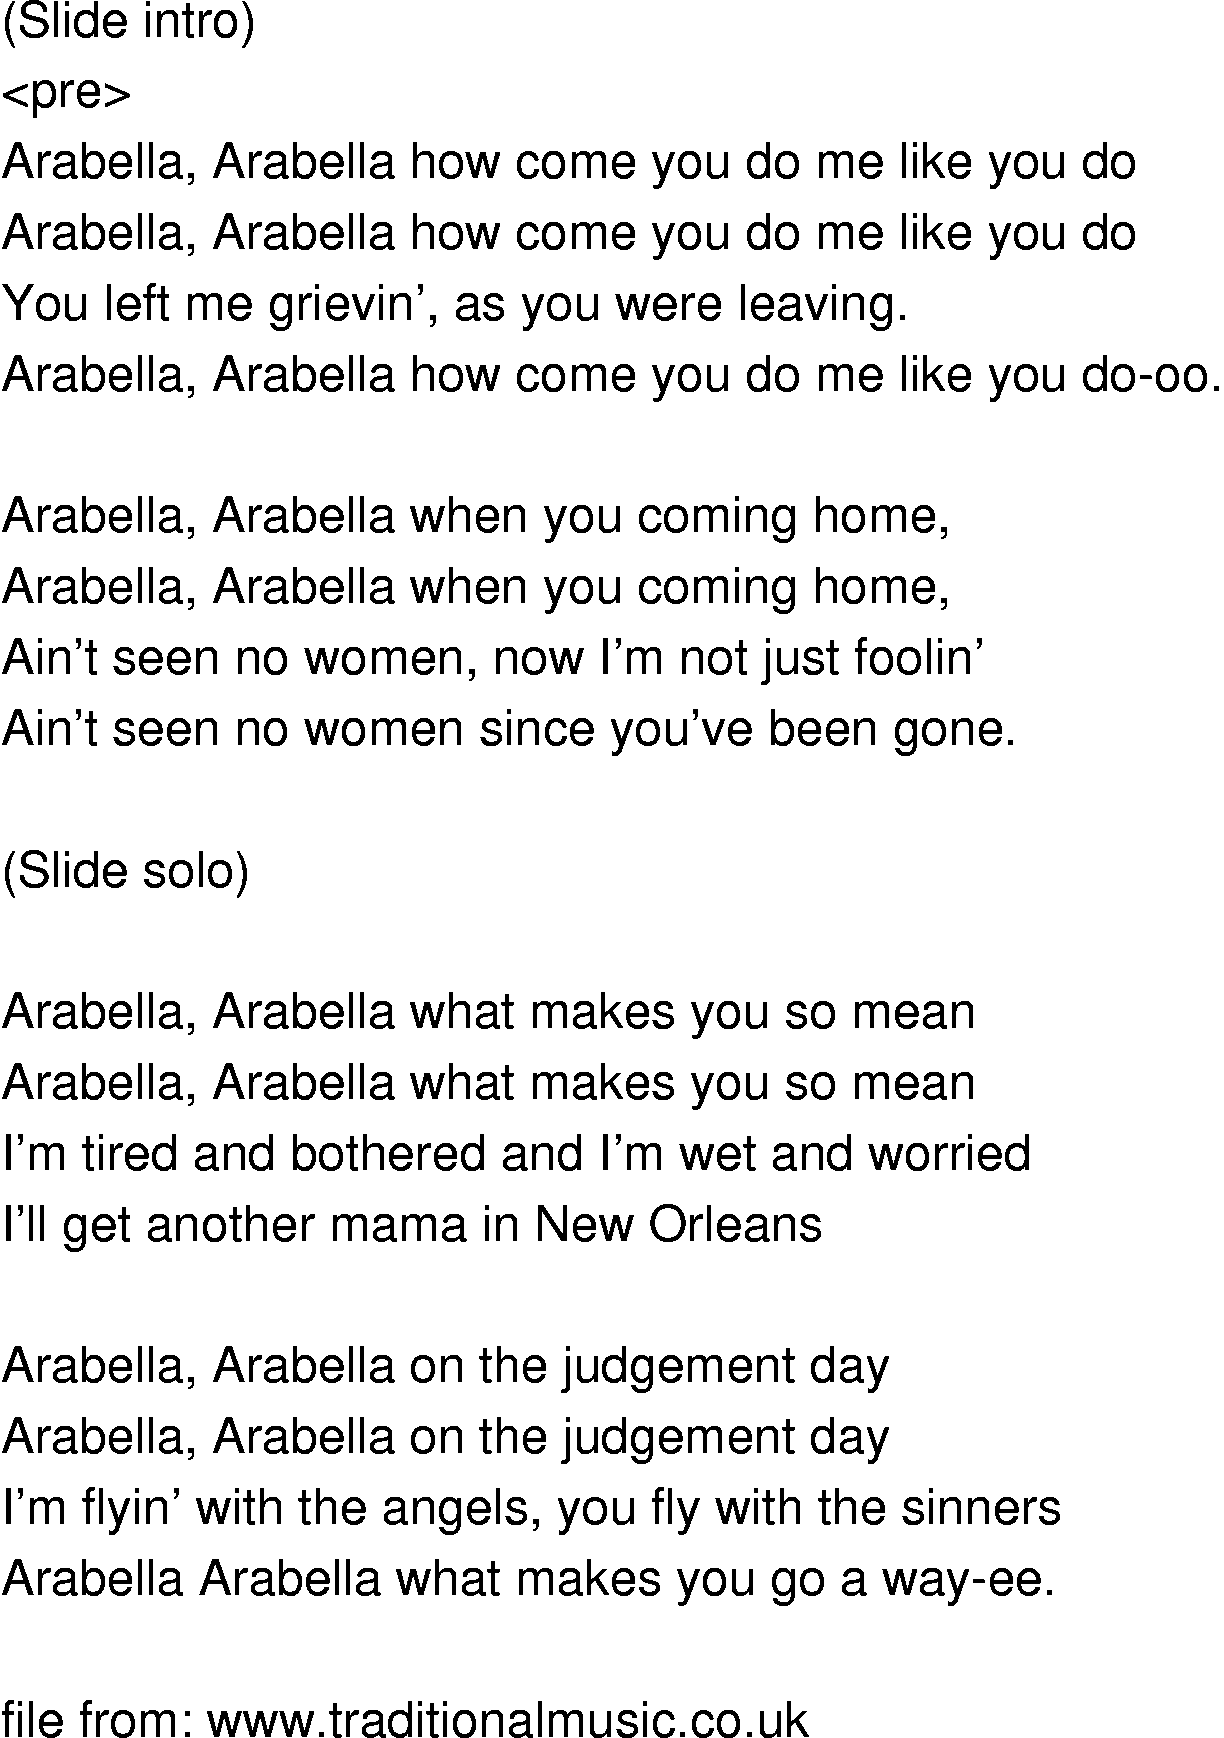 Old-Time Song Lyrics - Arabella